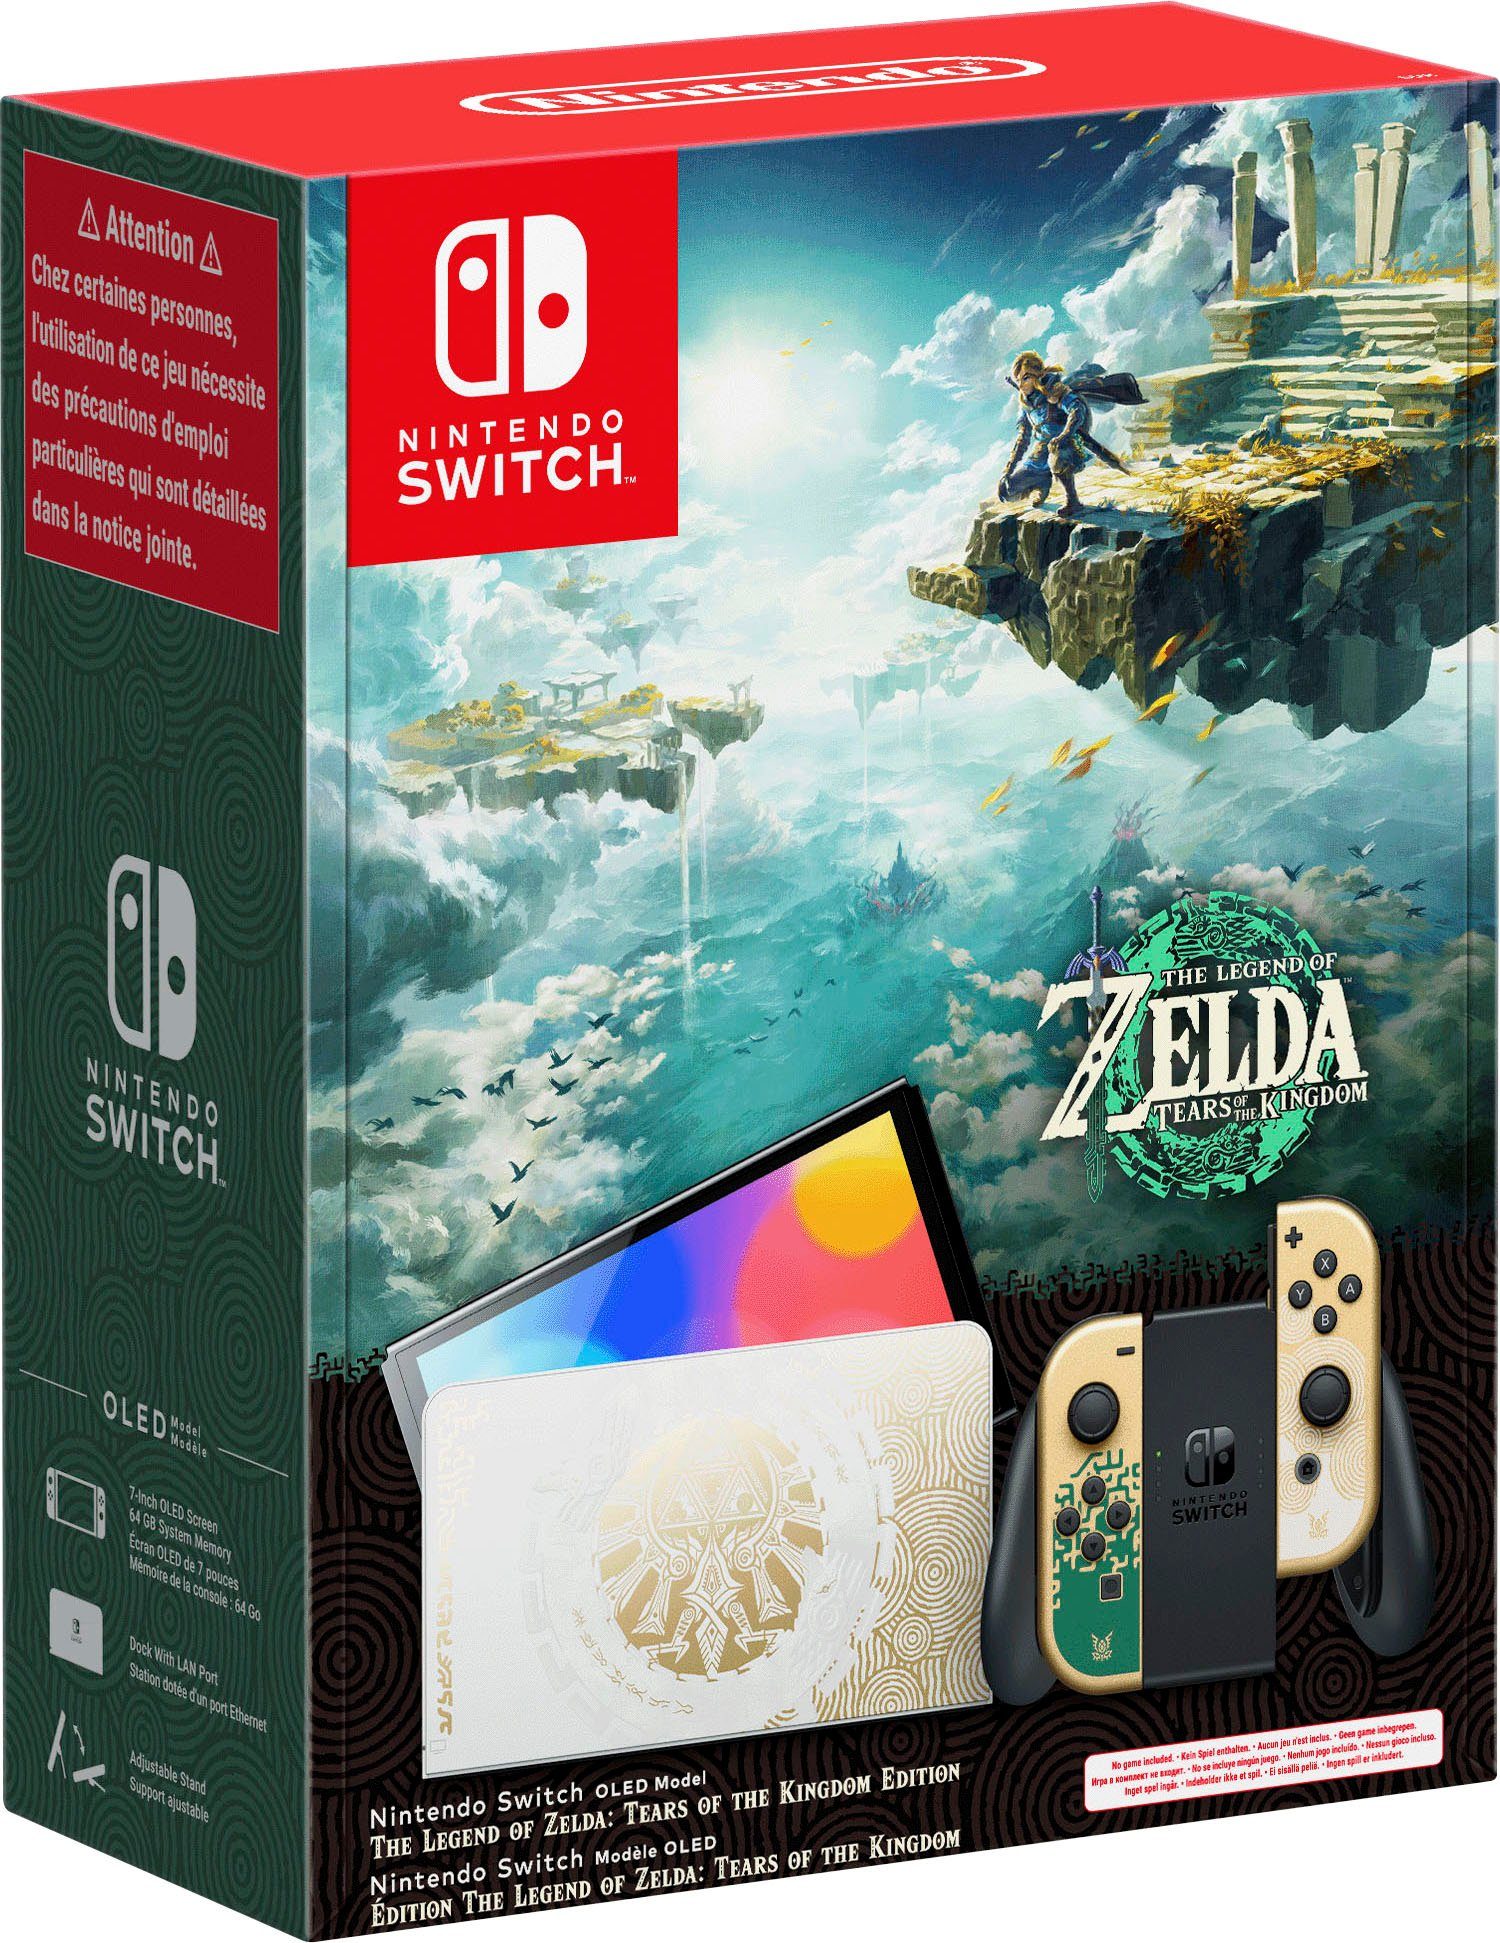 Nintendo Switch OLED The Legend of Zelda: Tears of the Kingdom Edition (kein Spiel im Lieferumfang)